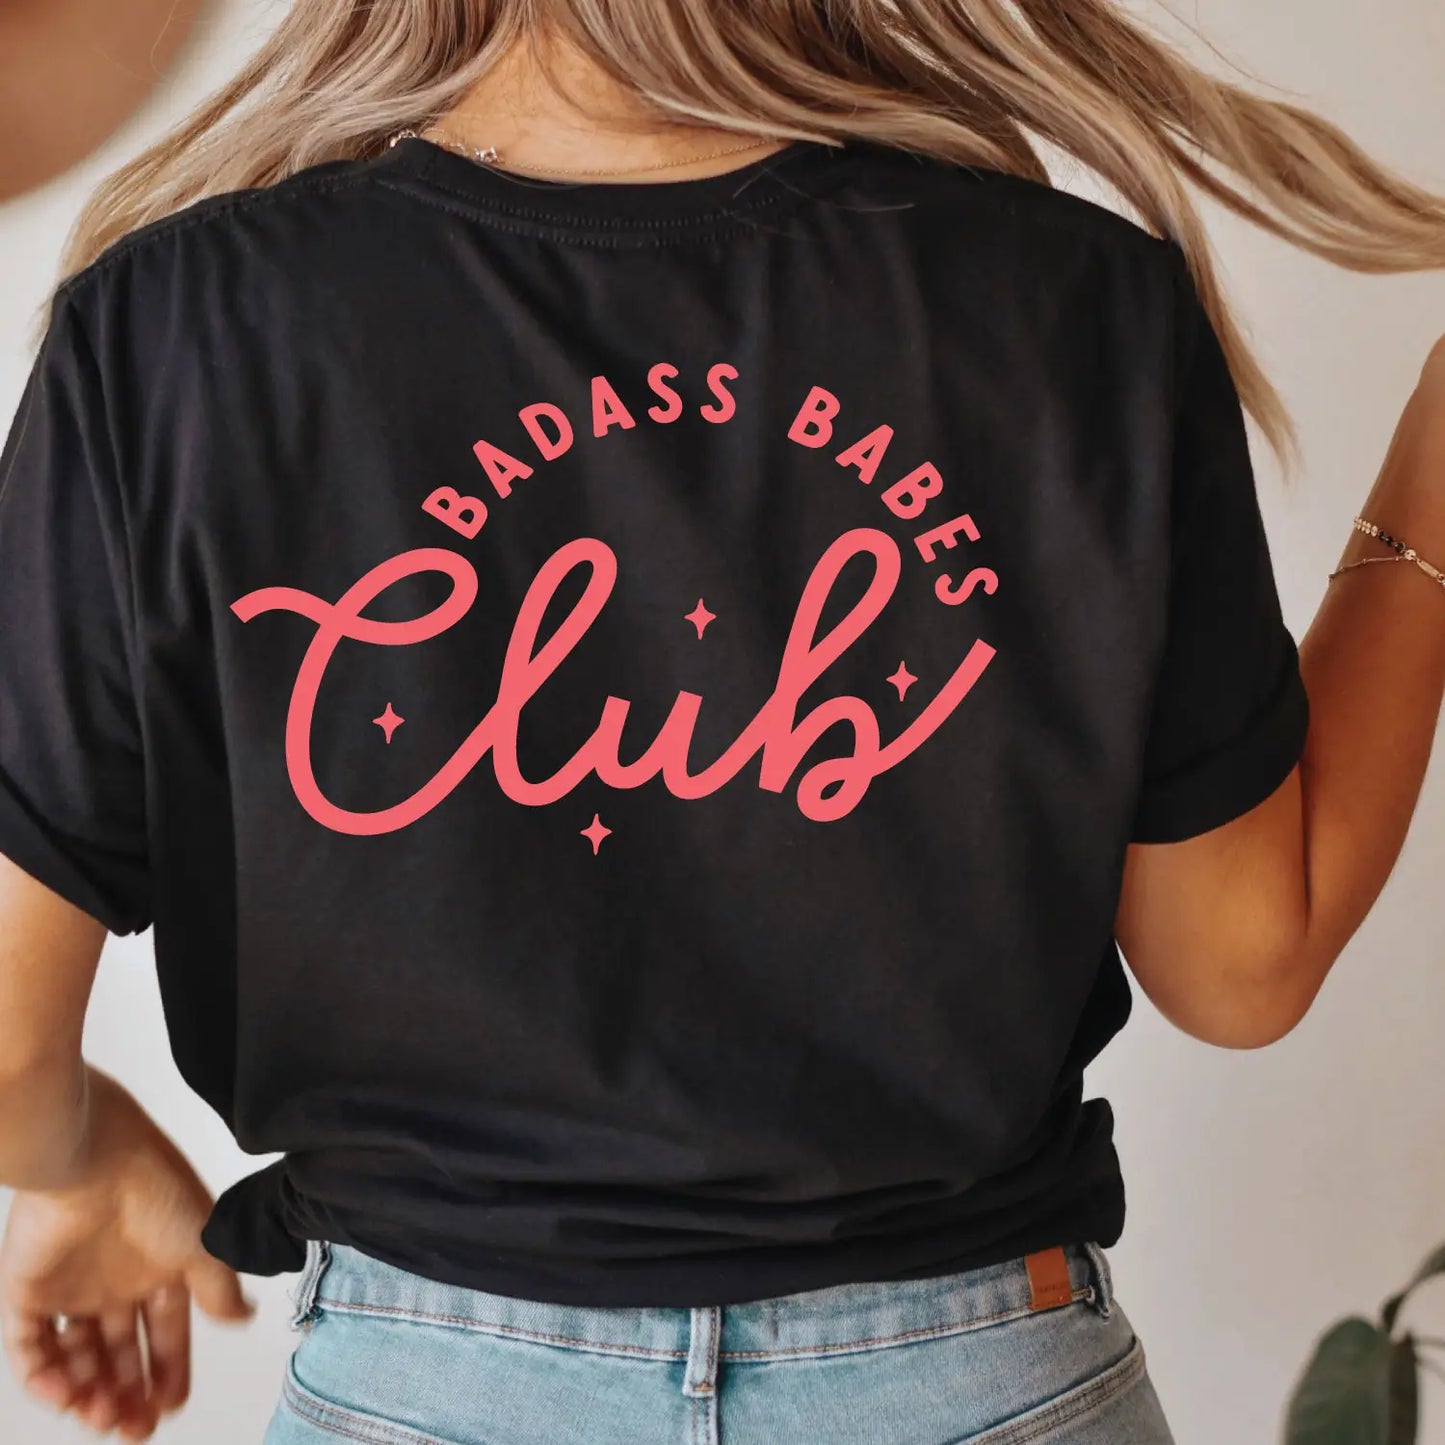 Badass babes club graphic tee